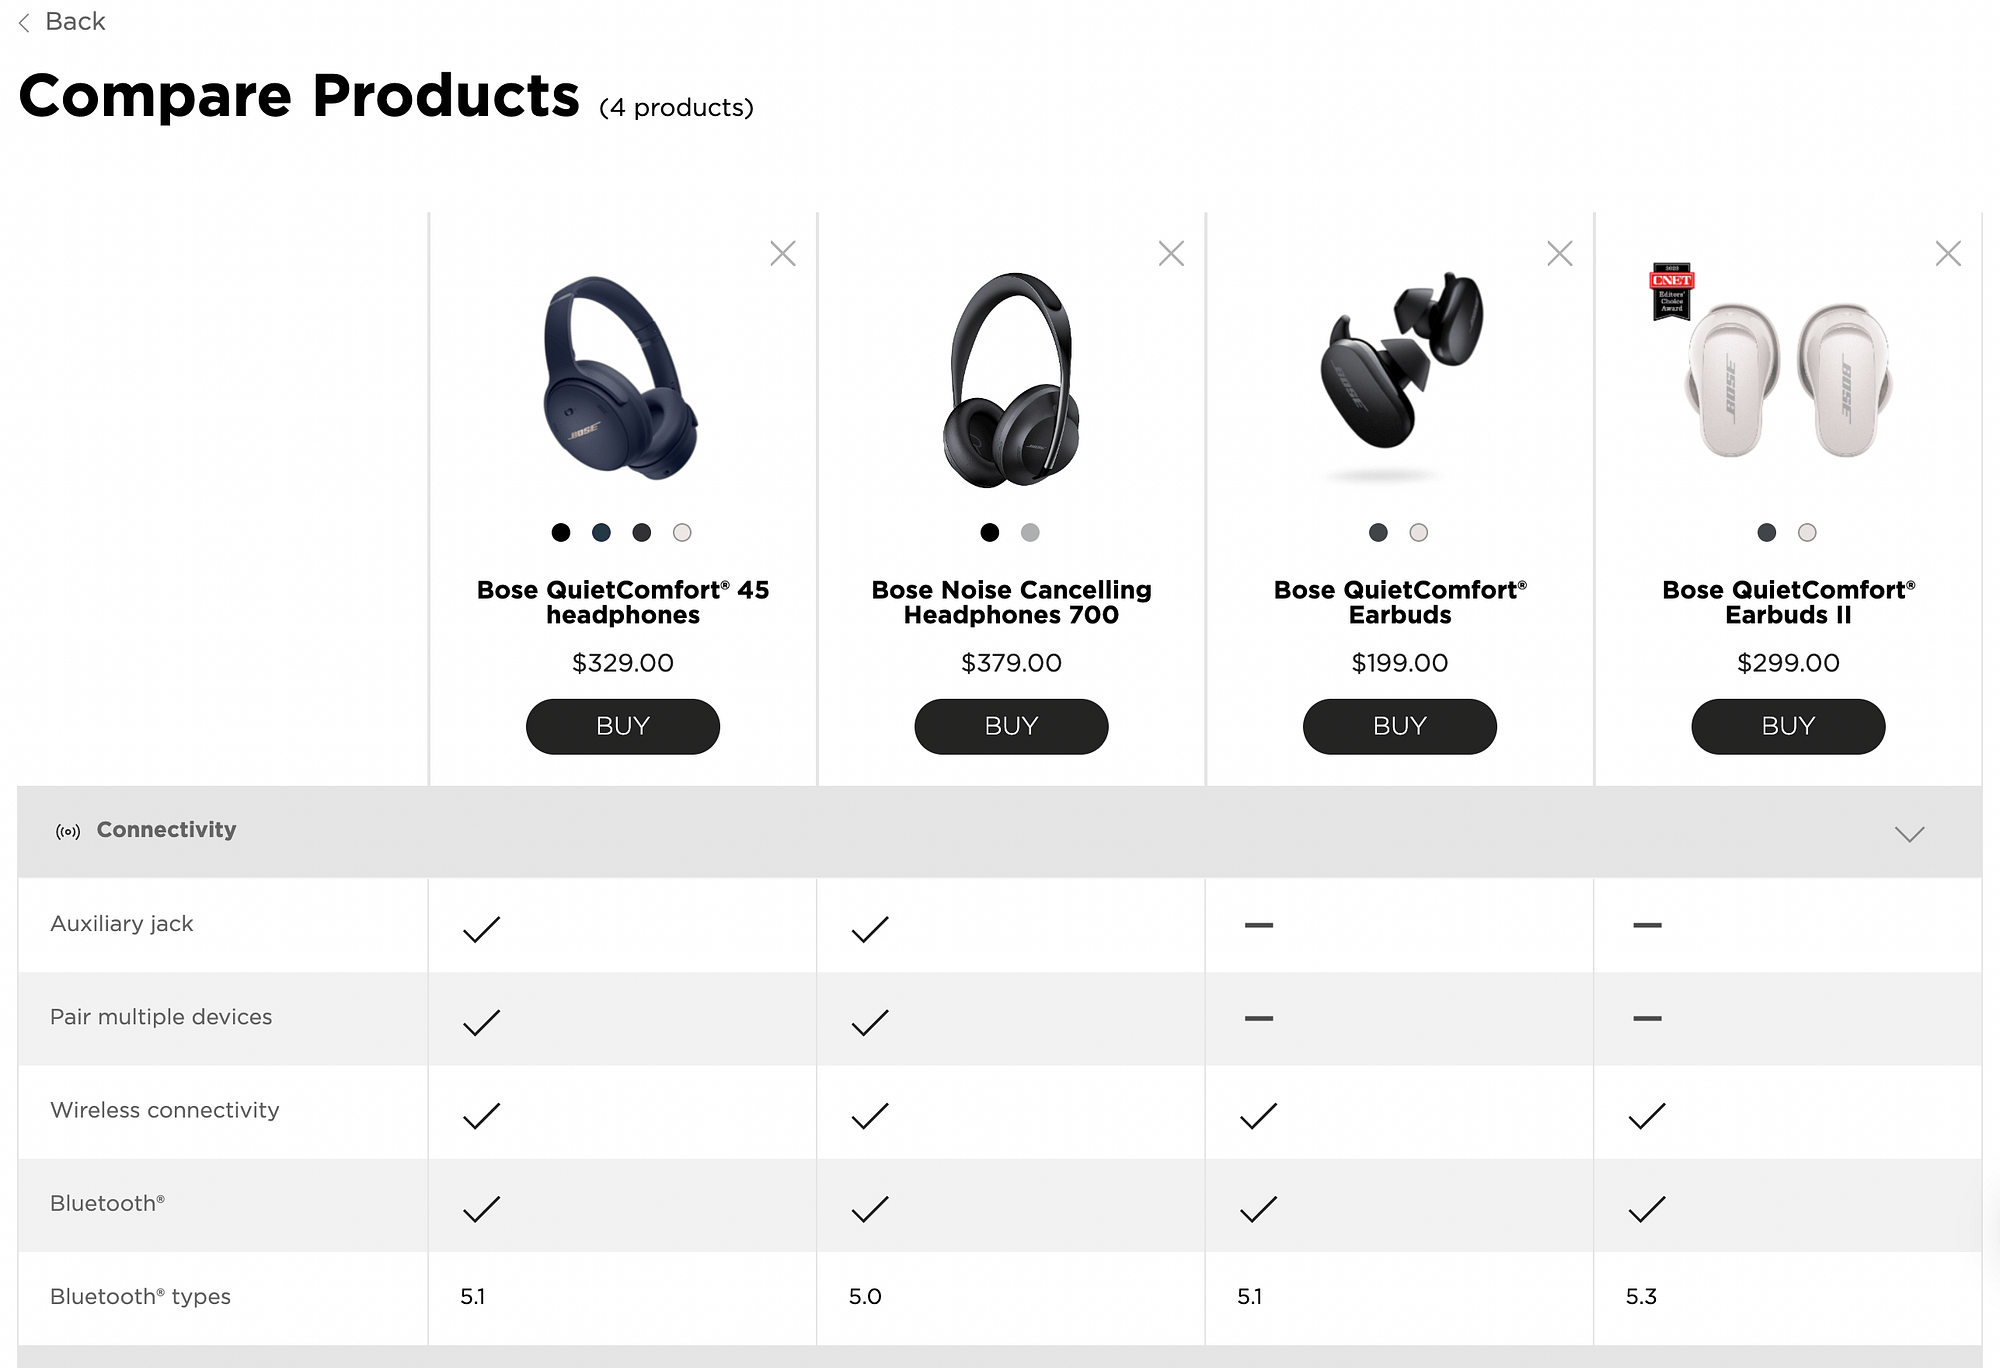 Bose product comparison table